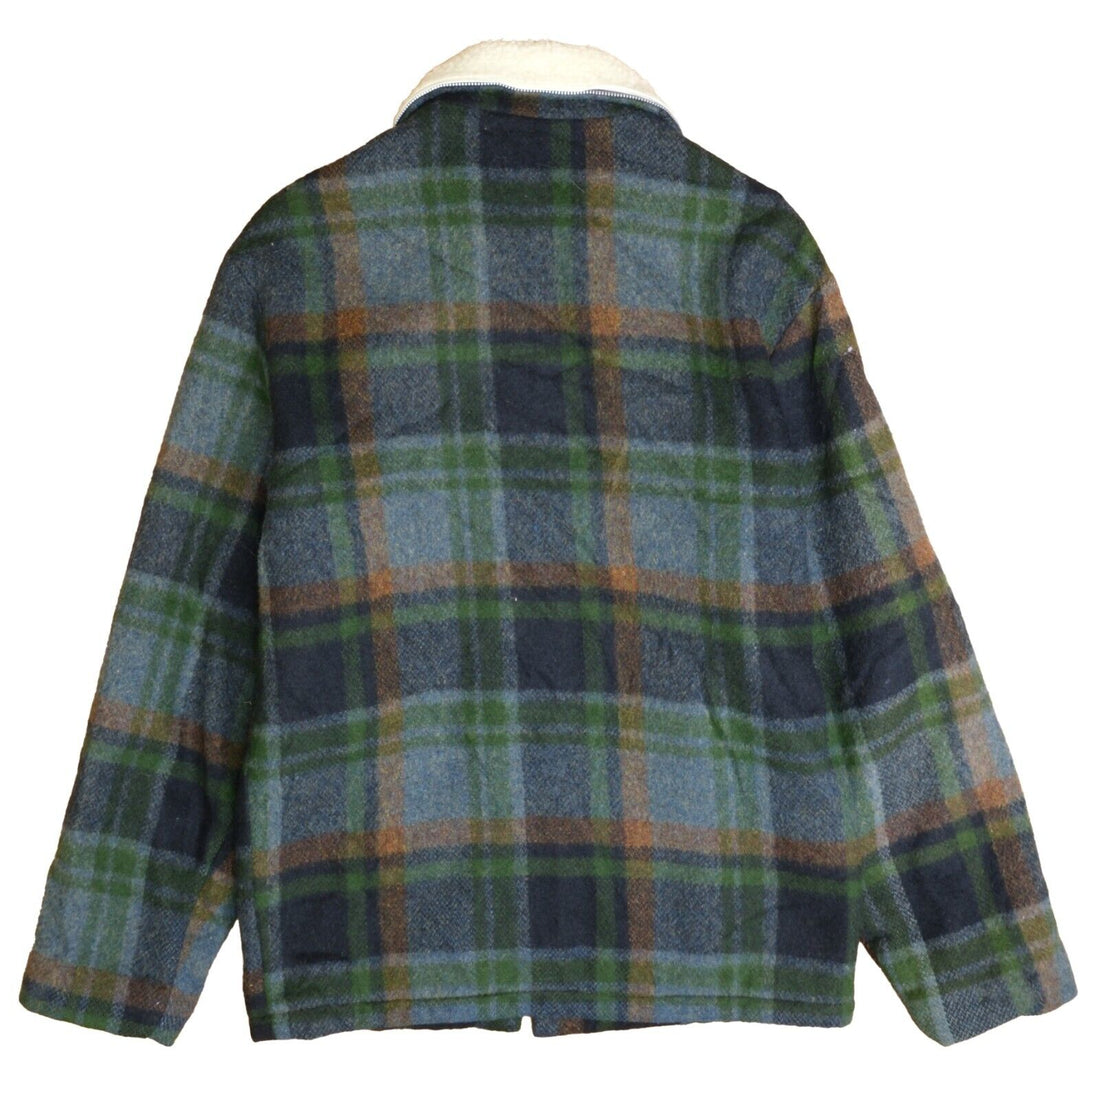 Vintage Peak 8 Silton Wool Jacket Size Small Green Plaid Sherpa Lined Talon Zip